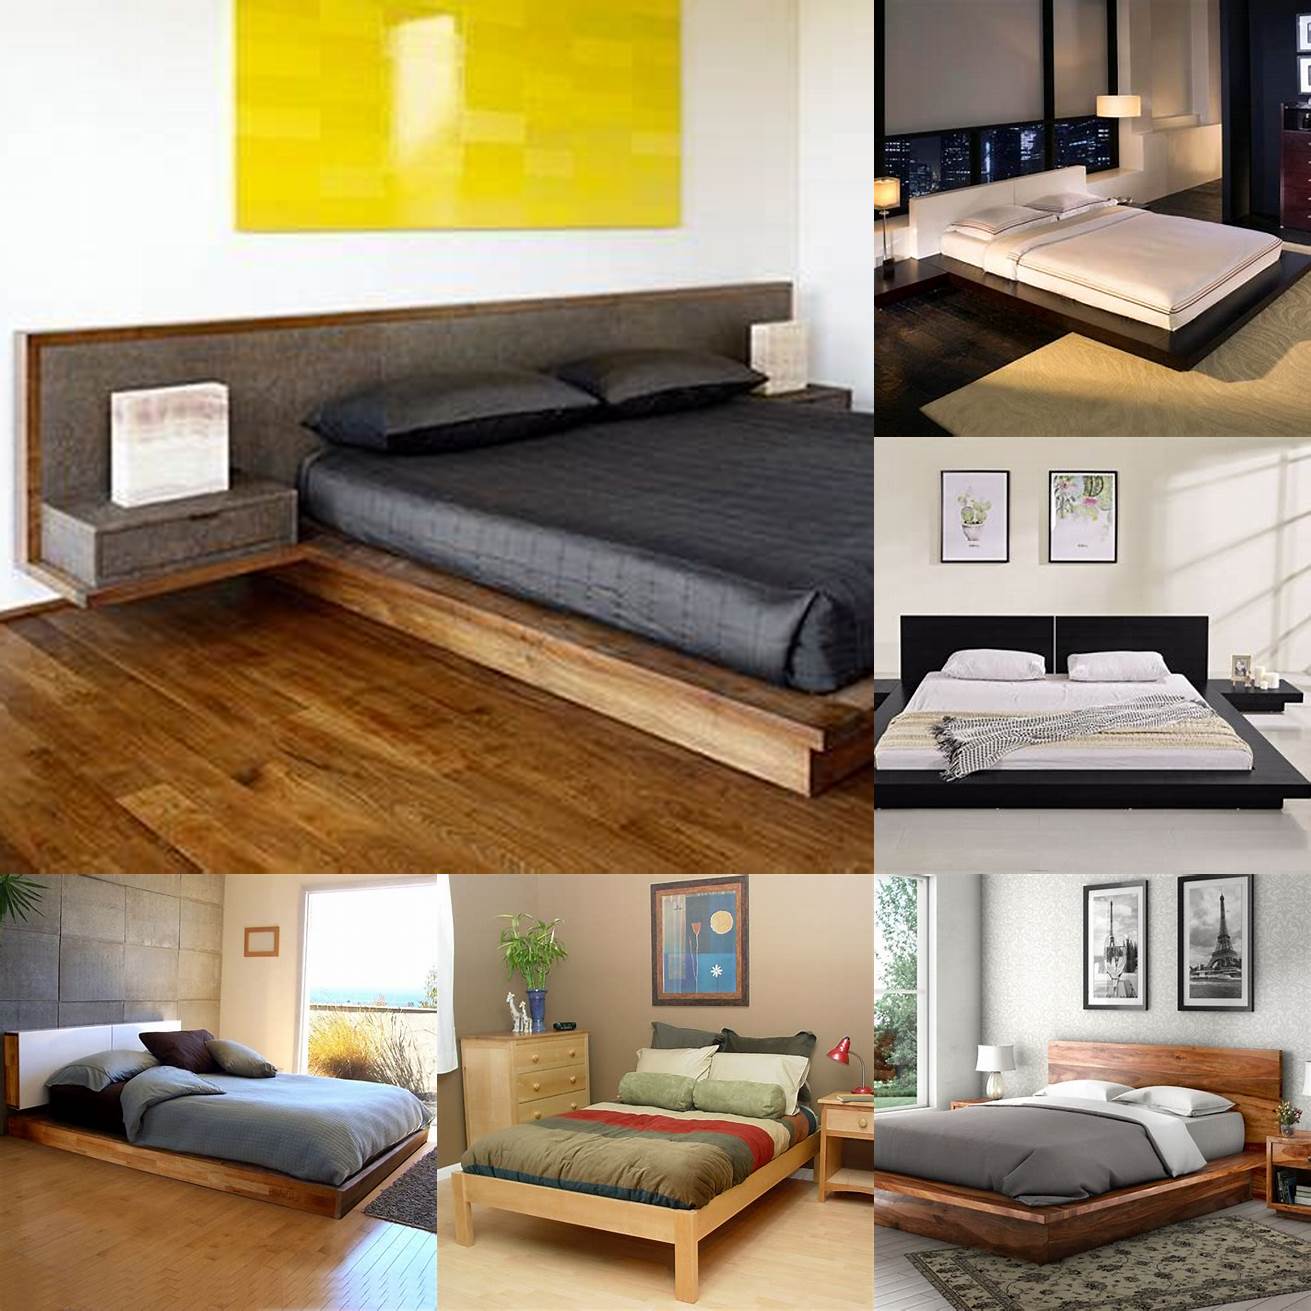 Design Platform beds may not suit everyones taste or bedroom decor